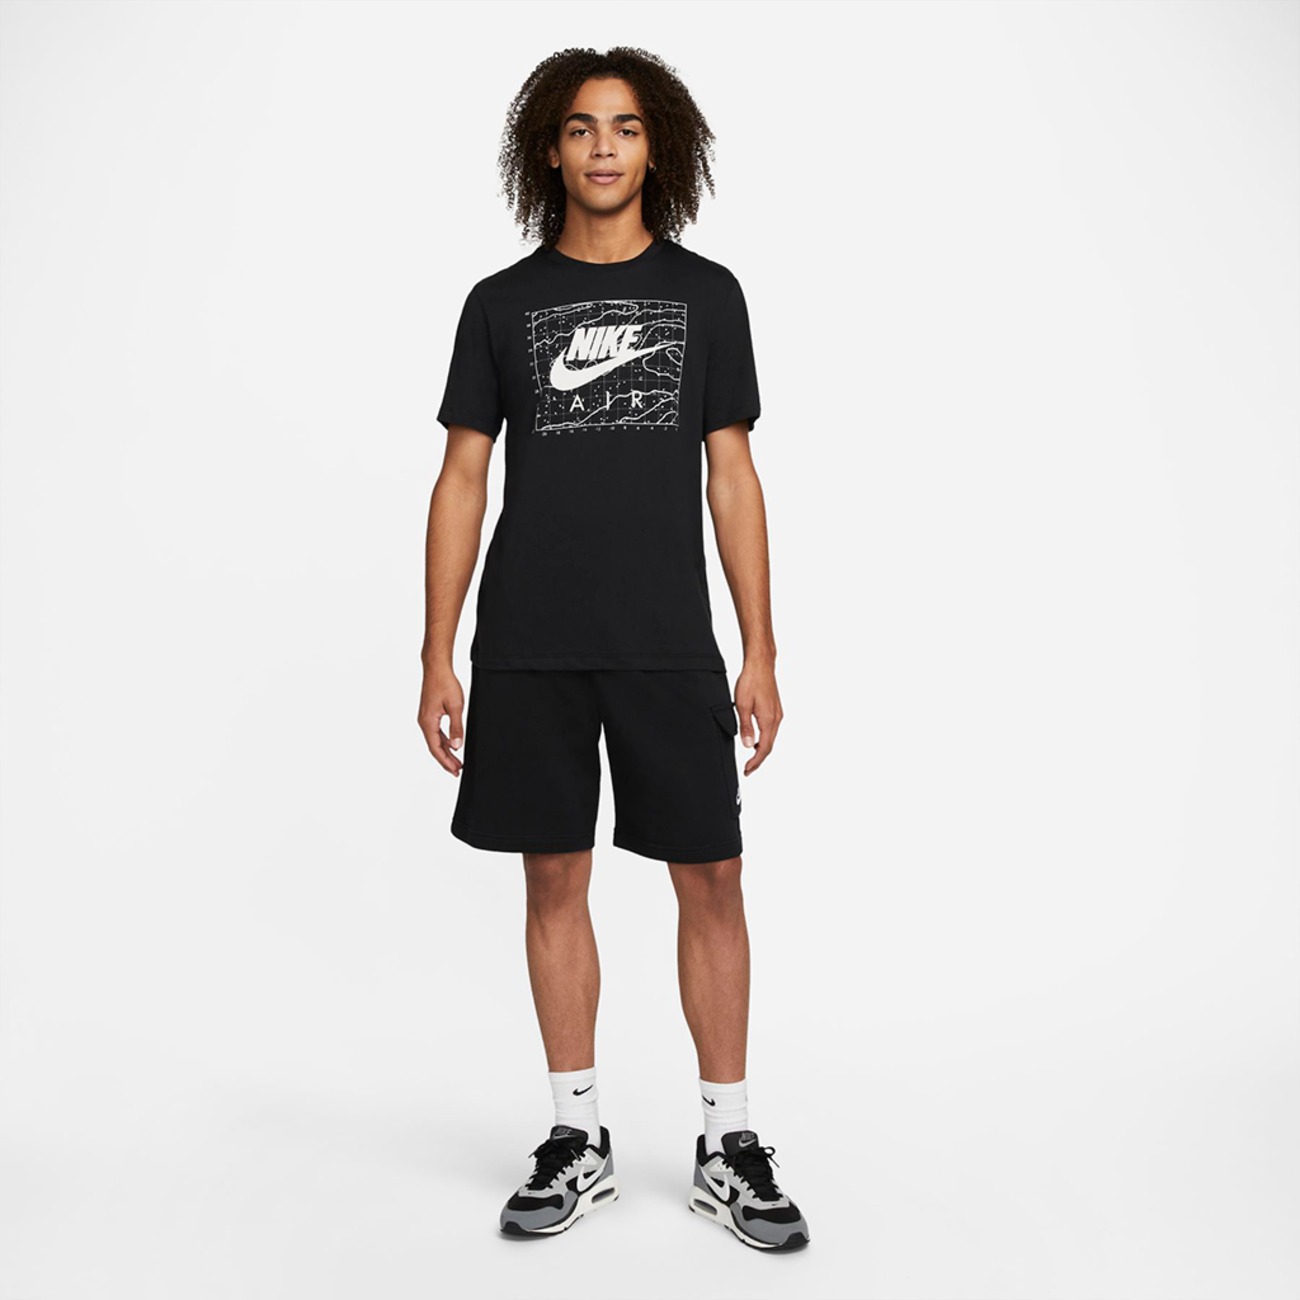 Camiseta Nike Air Masculina - Foto 10